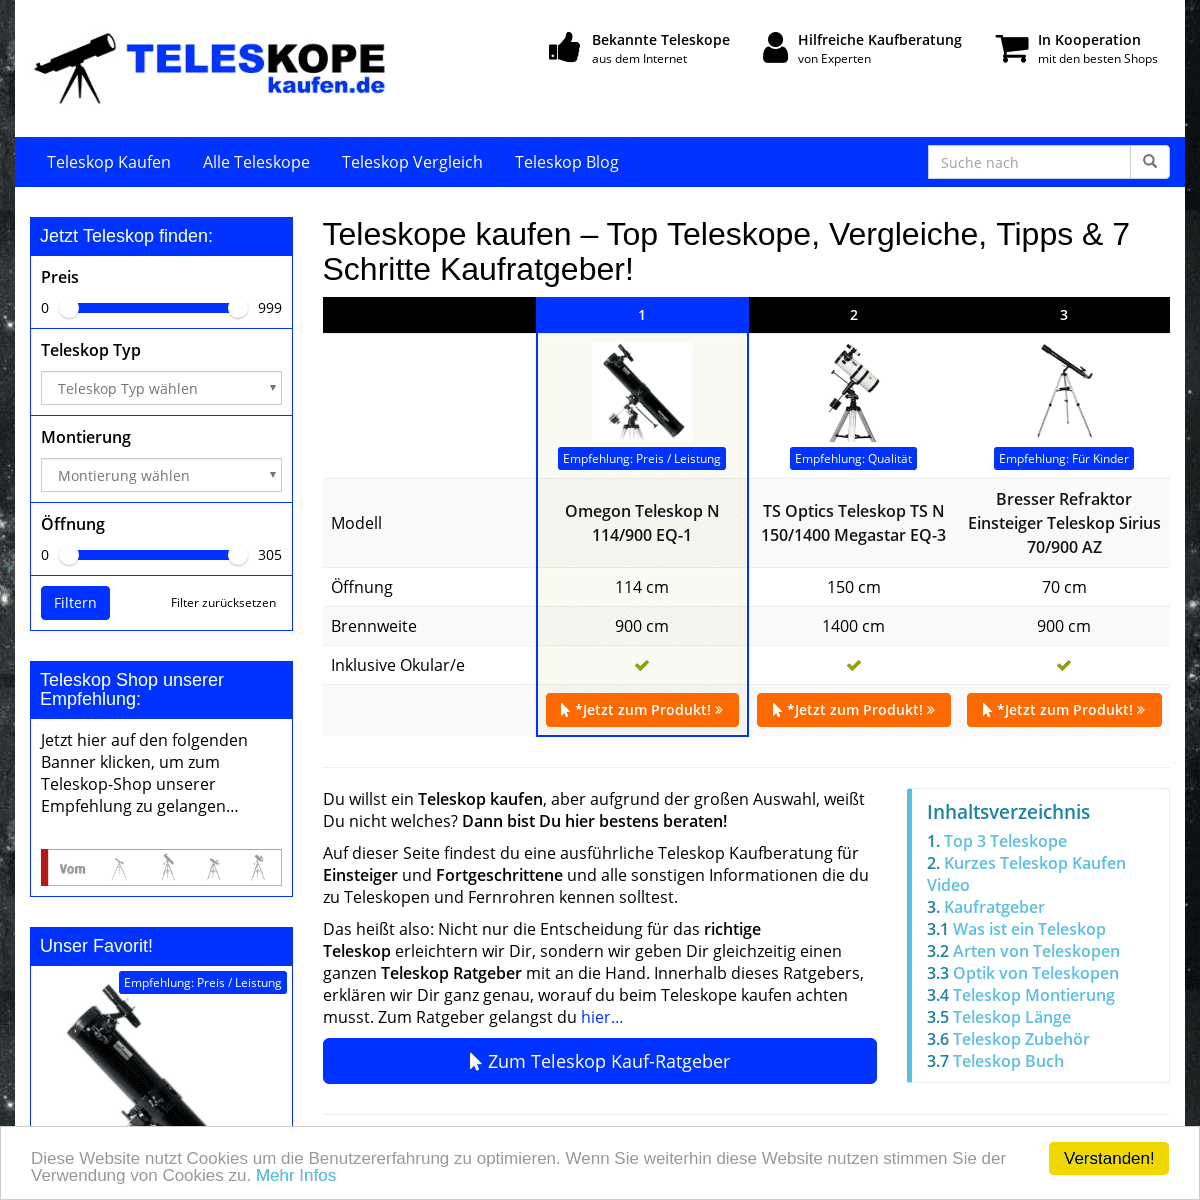 A complete backup of teleskope-kaufen.de